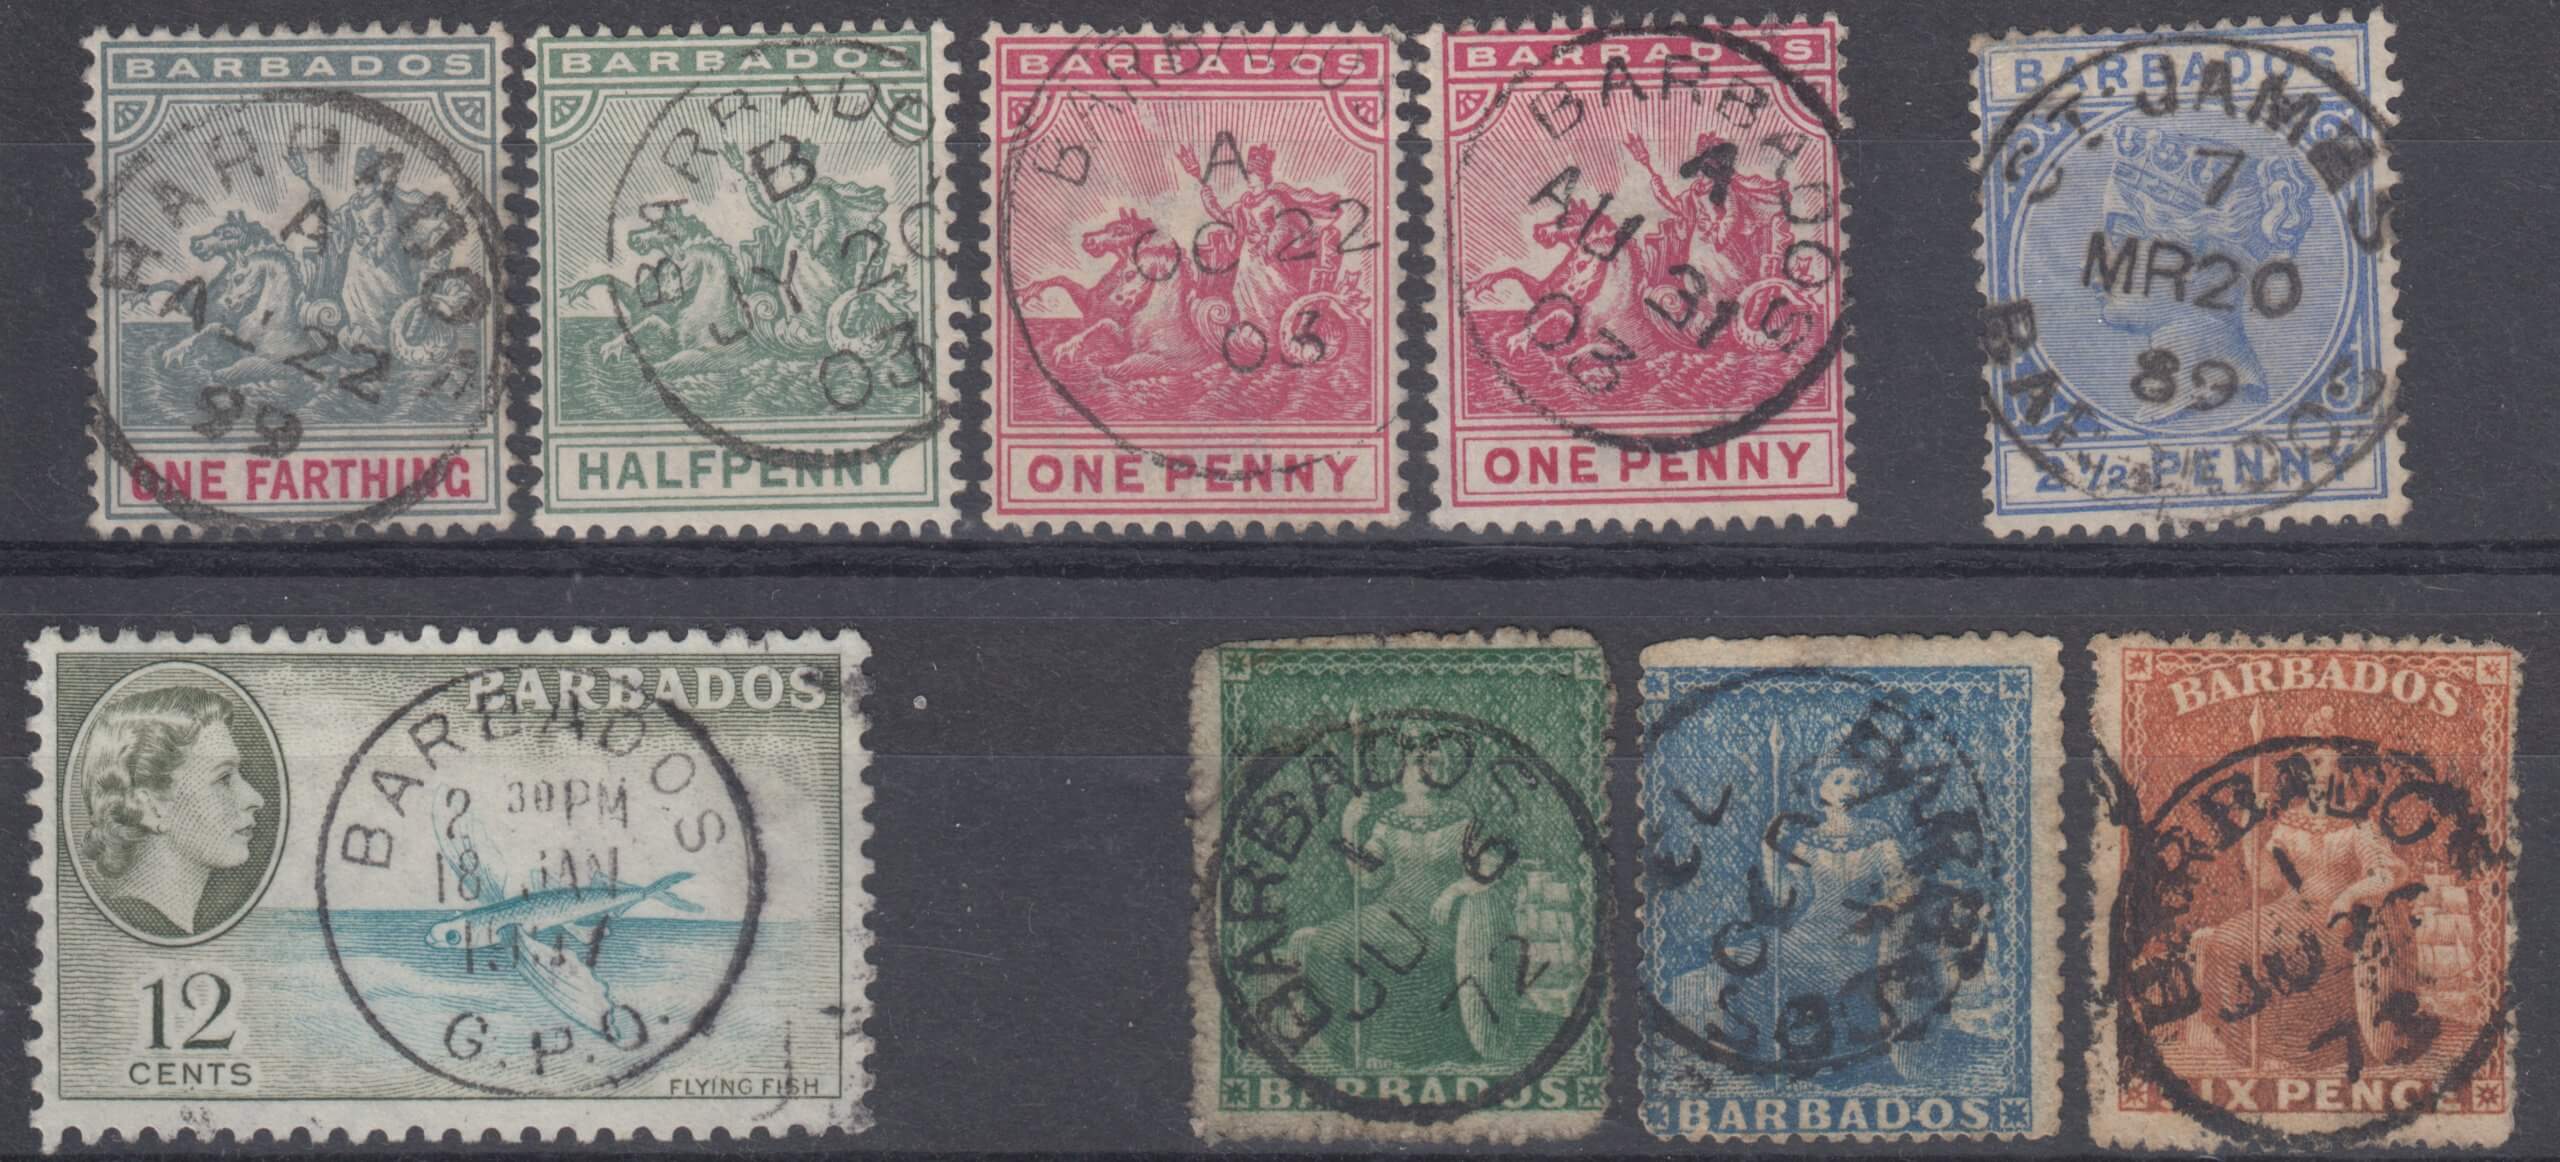 Barbados postmarks from York Stamp Fair June 2022